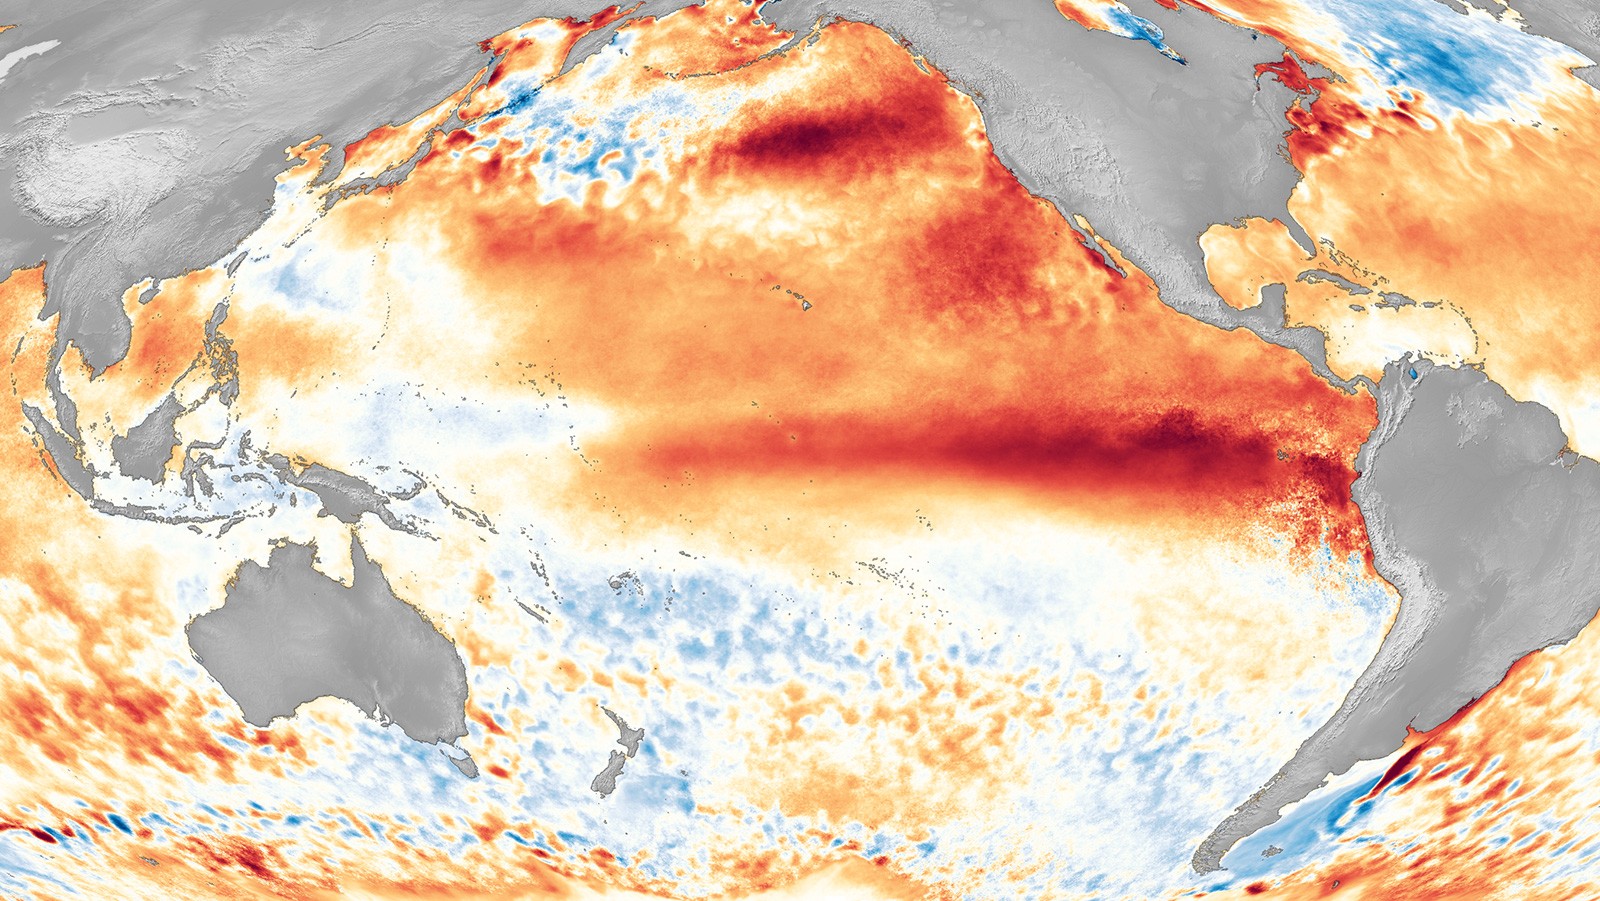 Imagen satelital de El Niño. Crédito de la imagen: NOAA National Environmental Satellite, Data, and Information Service (NESDIS)